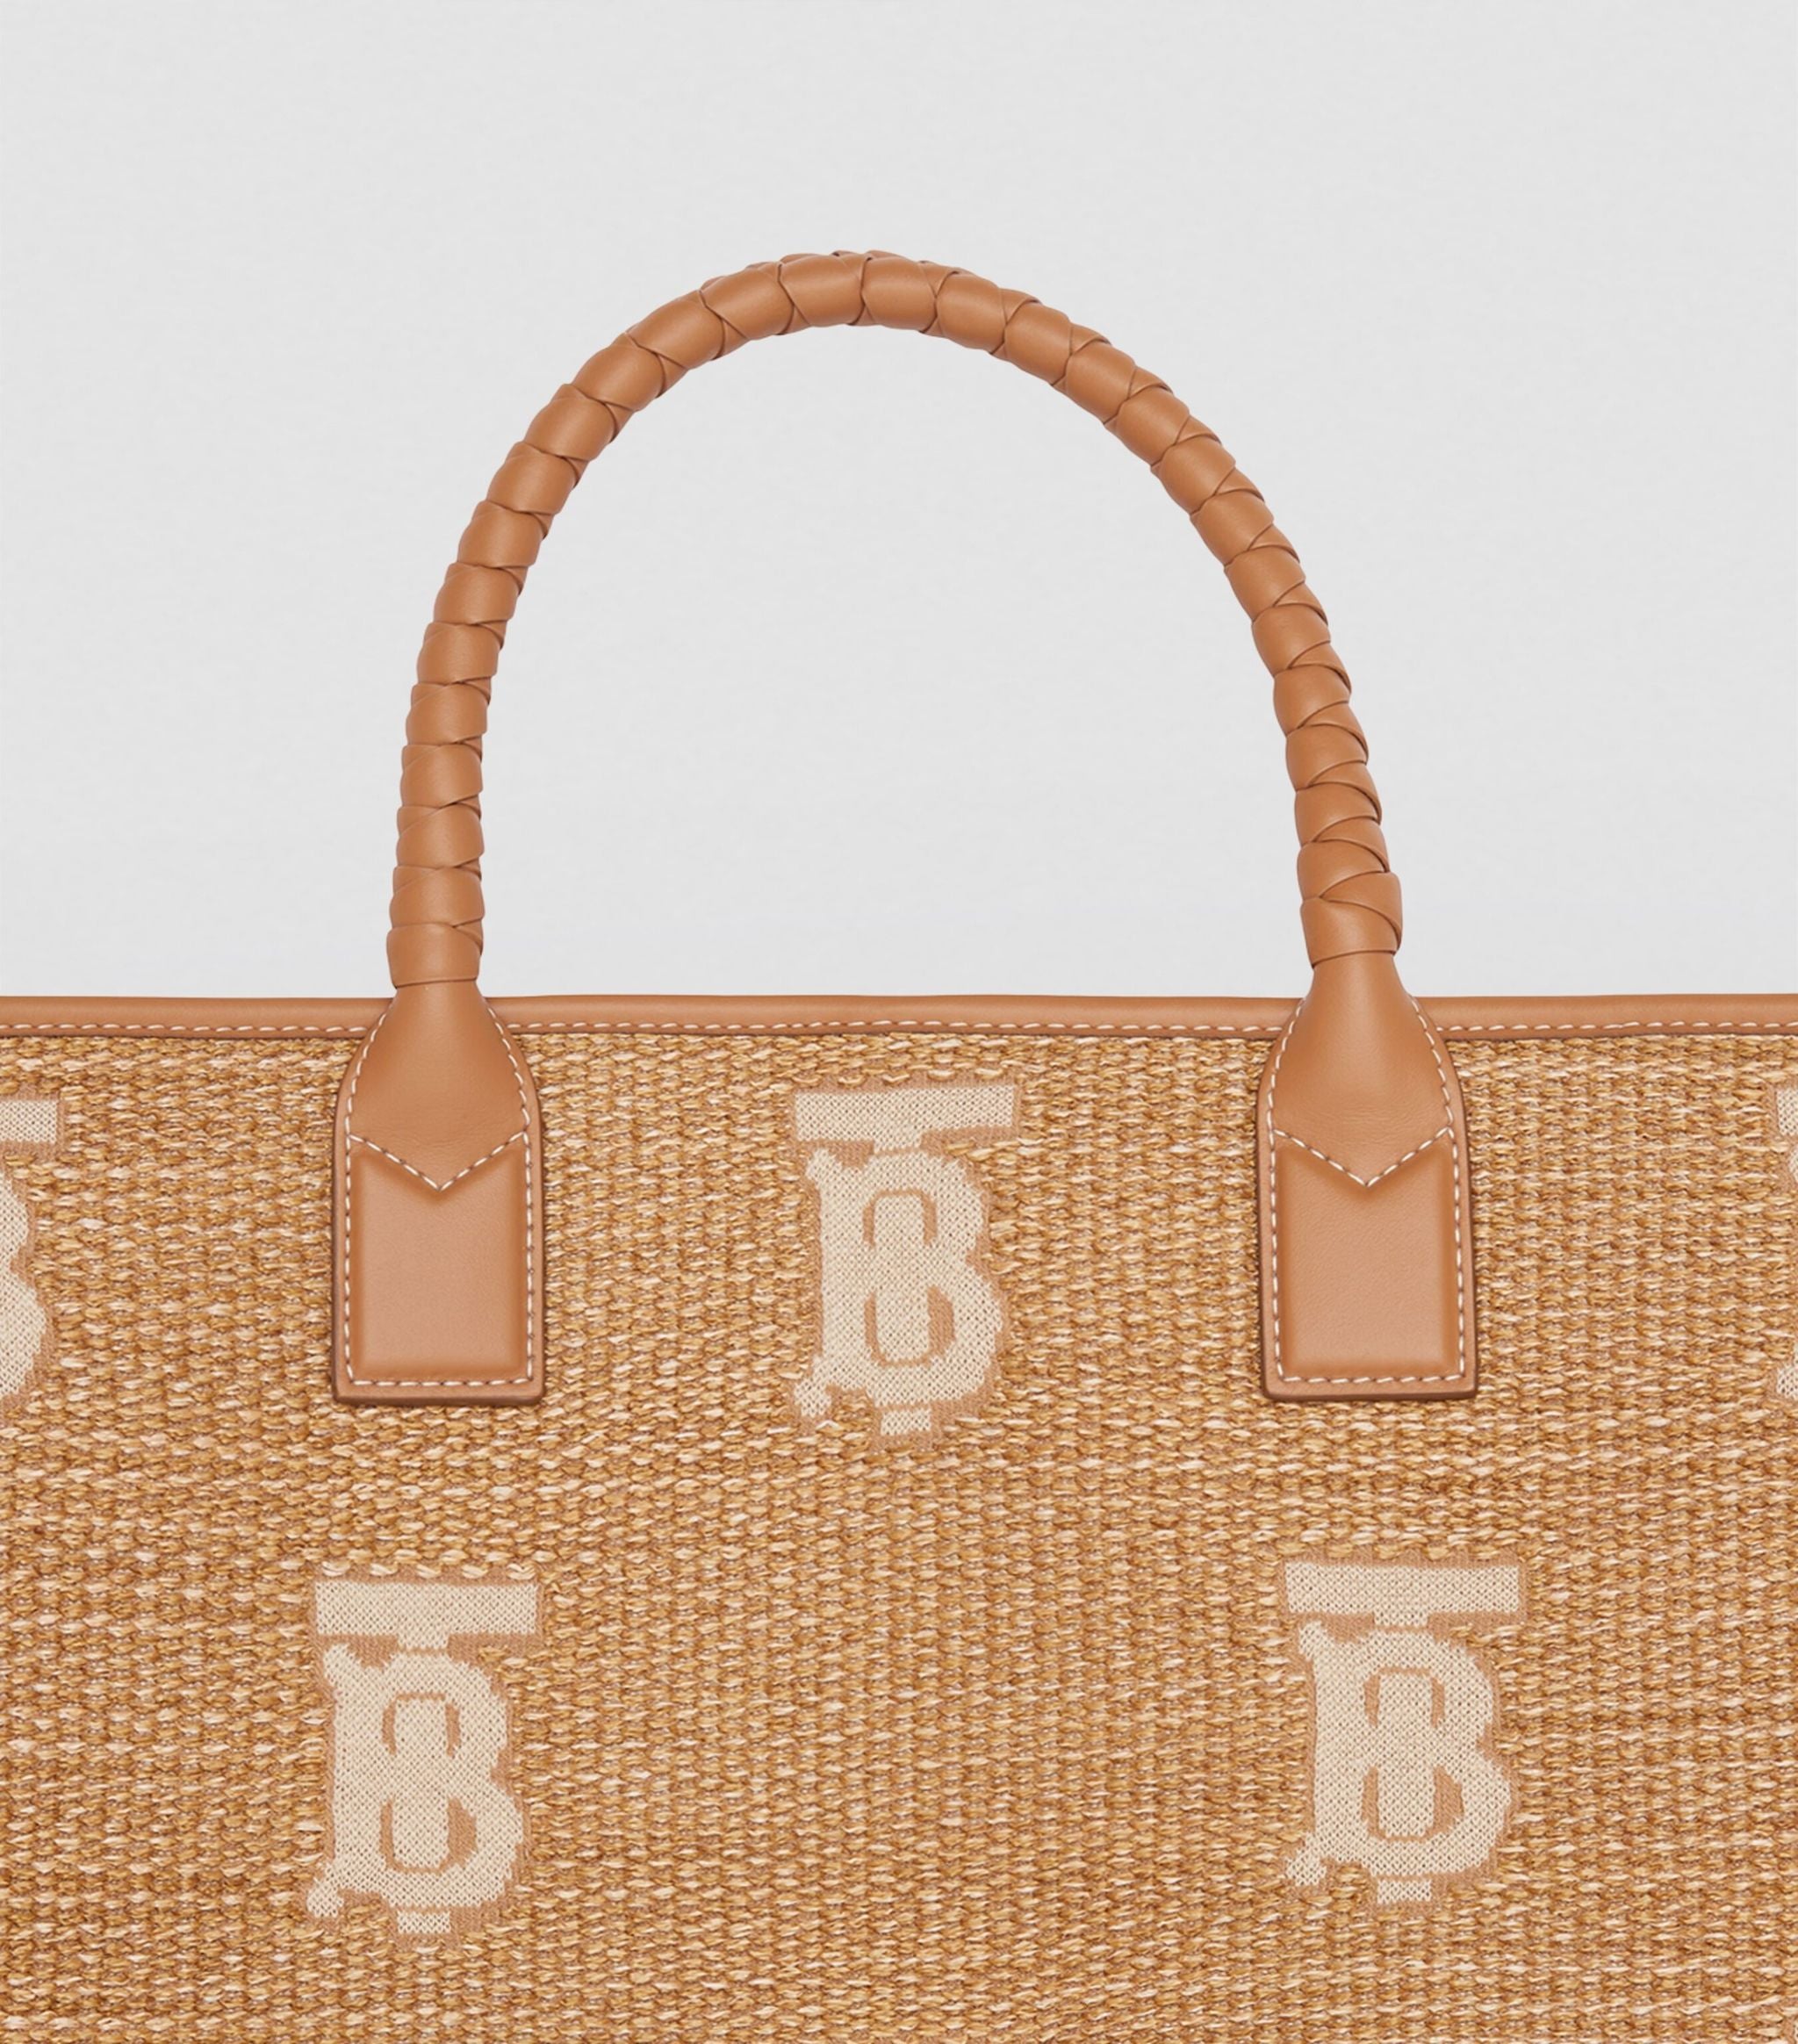 Burberry Monogram Big Tote Bag